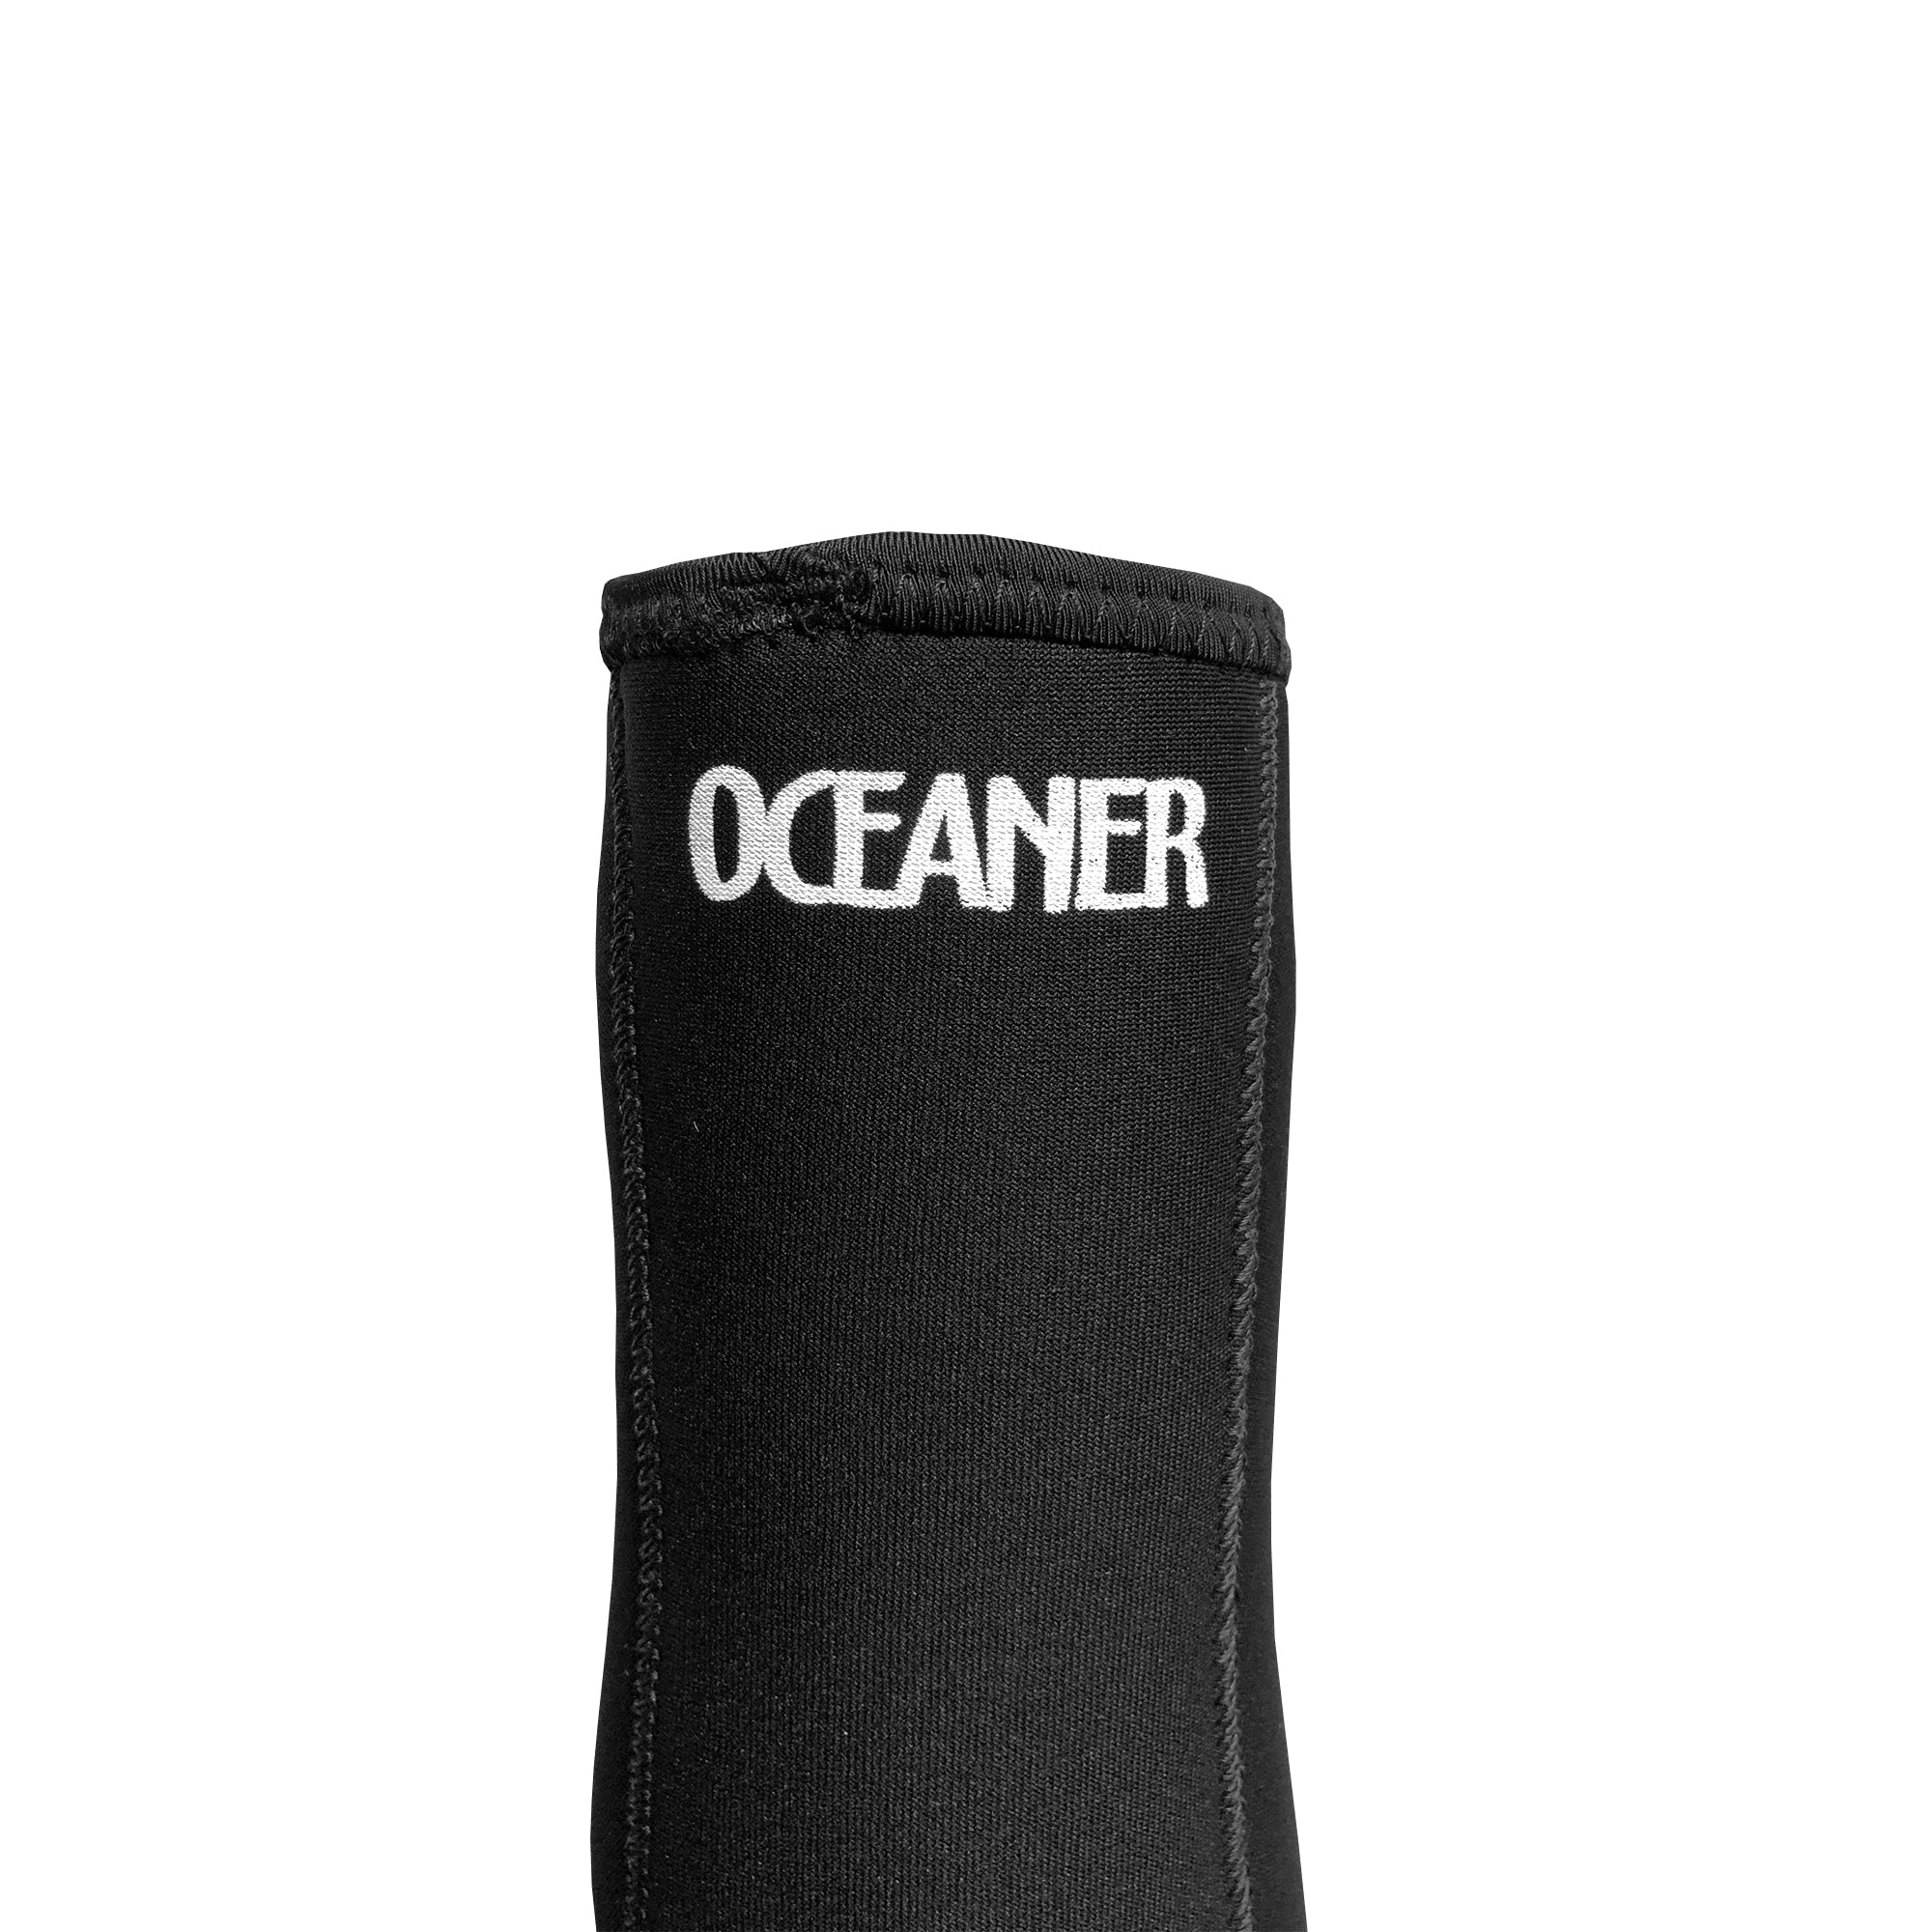 Oceaner 5mm Socks | Diving Sports Canada